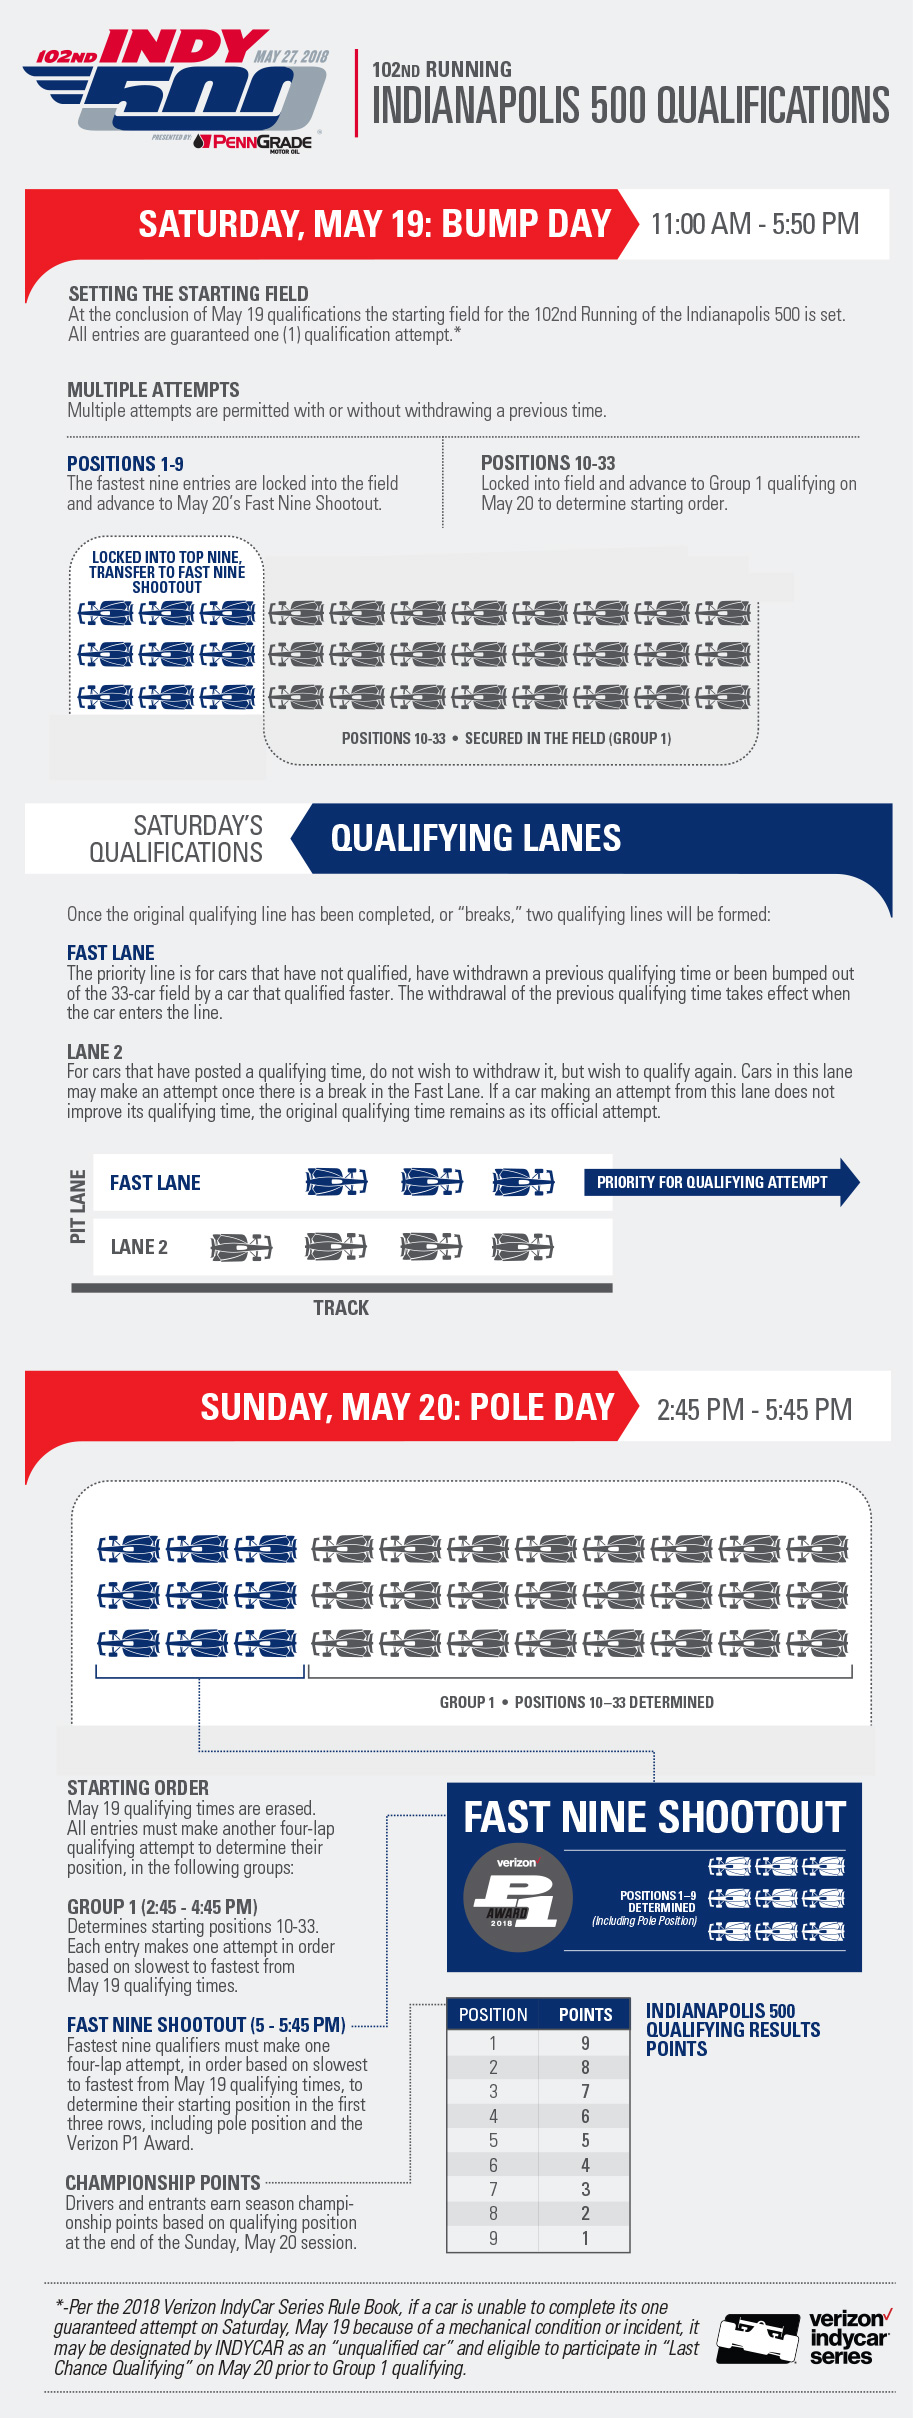 102nd Indianapolis 500 Qualification Procedures